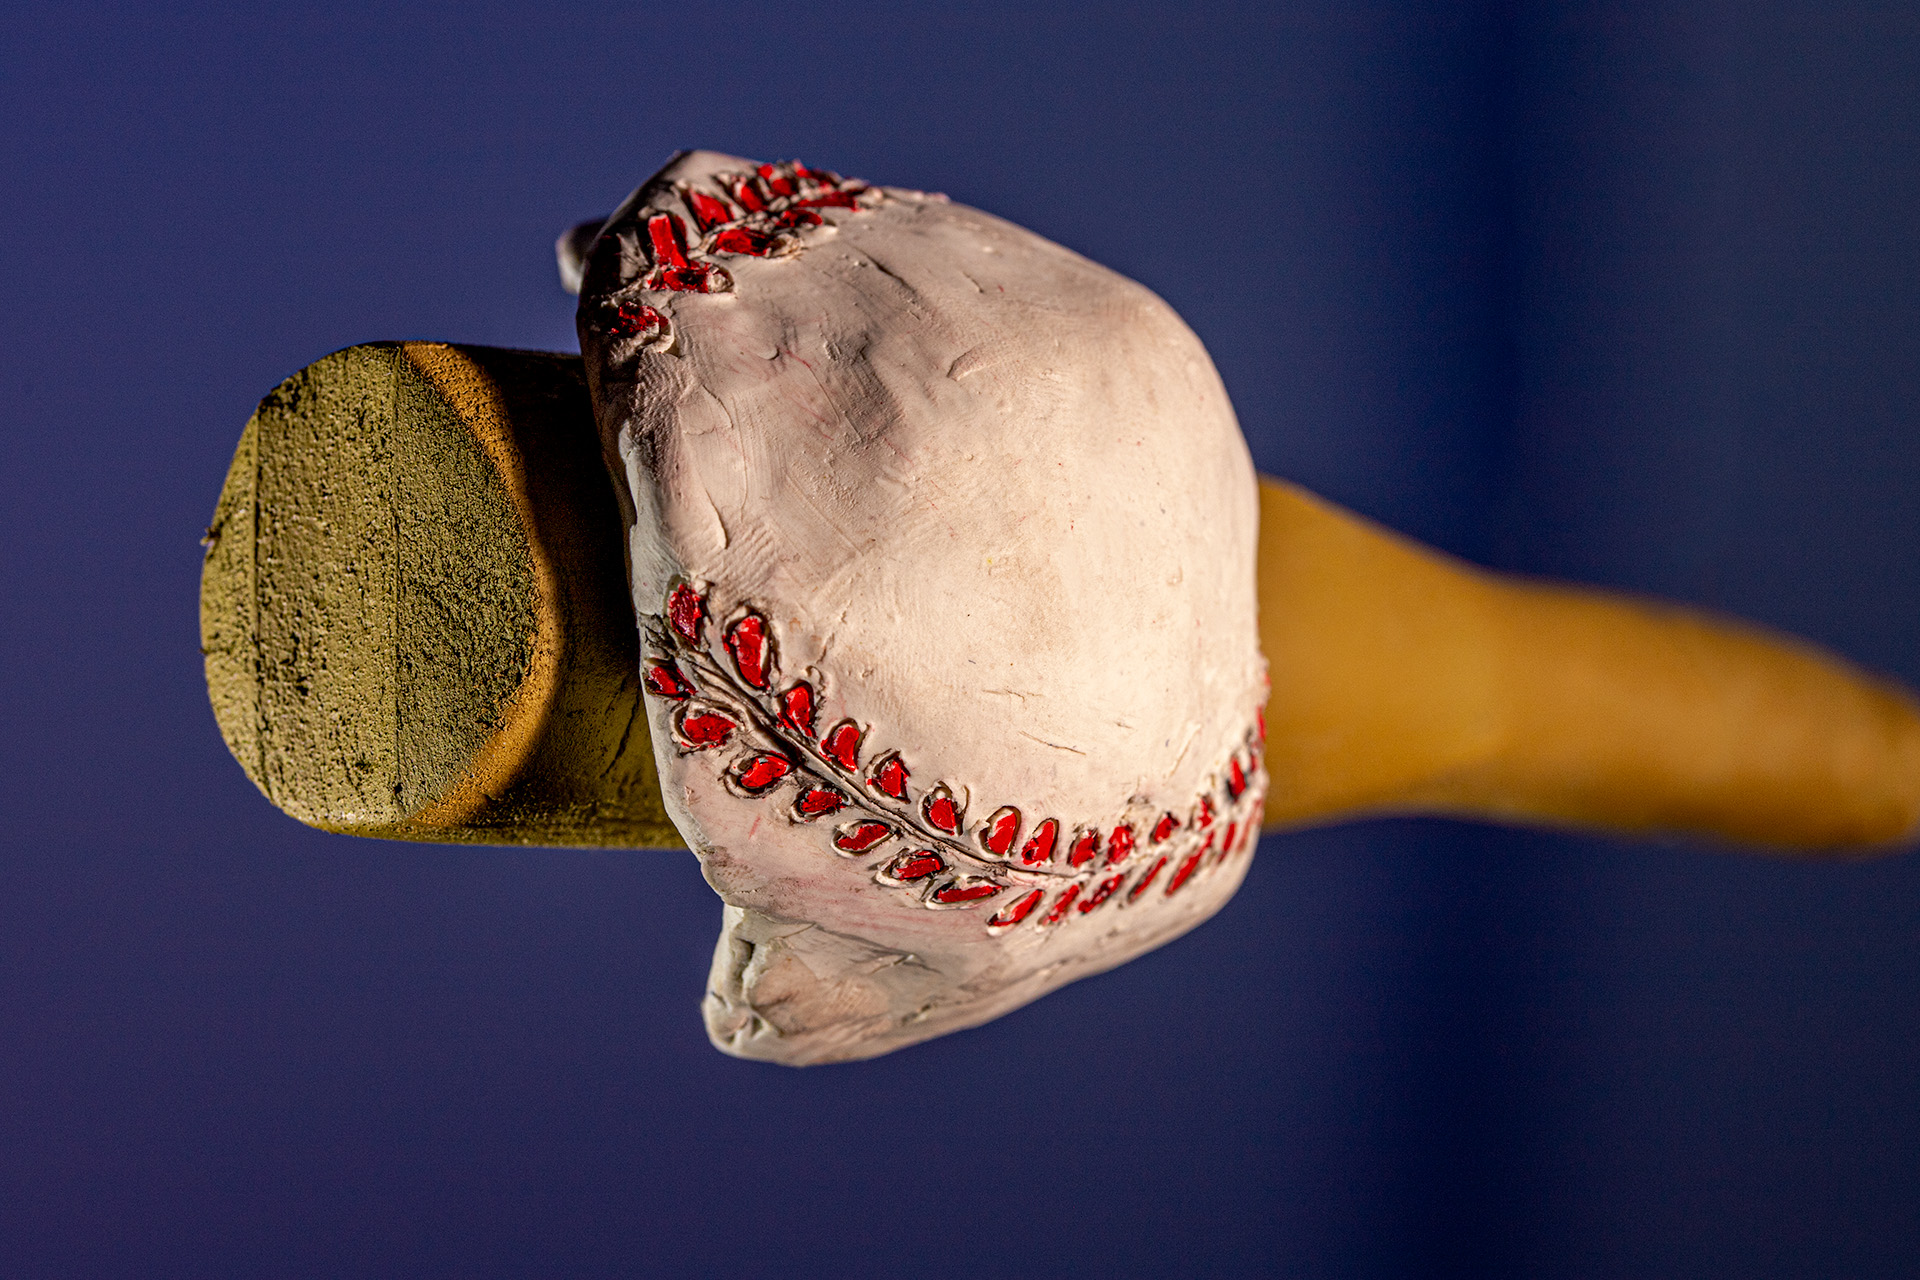 A baseball being deformed by a baseball bat